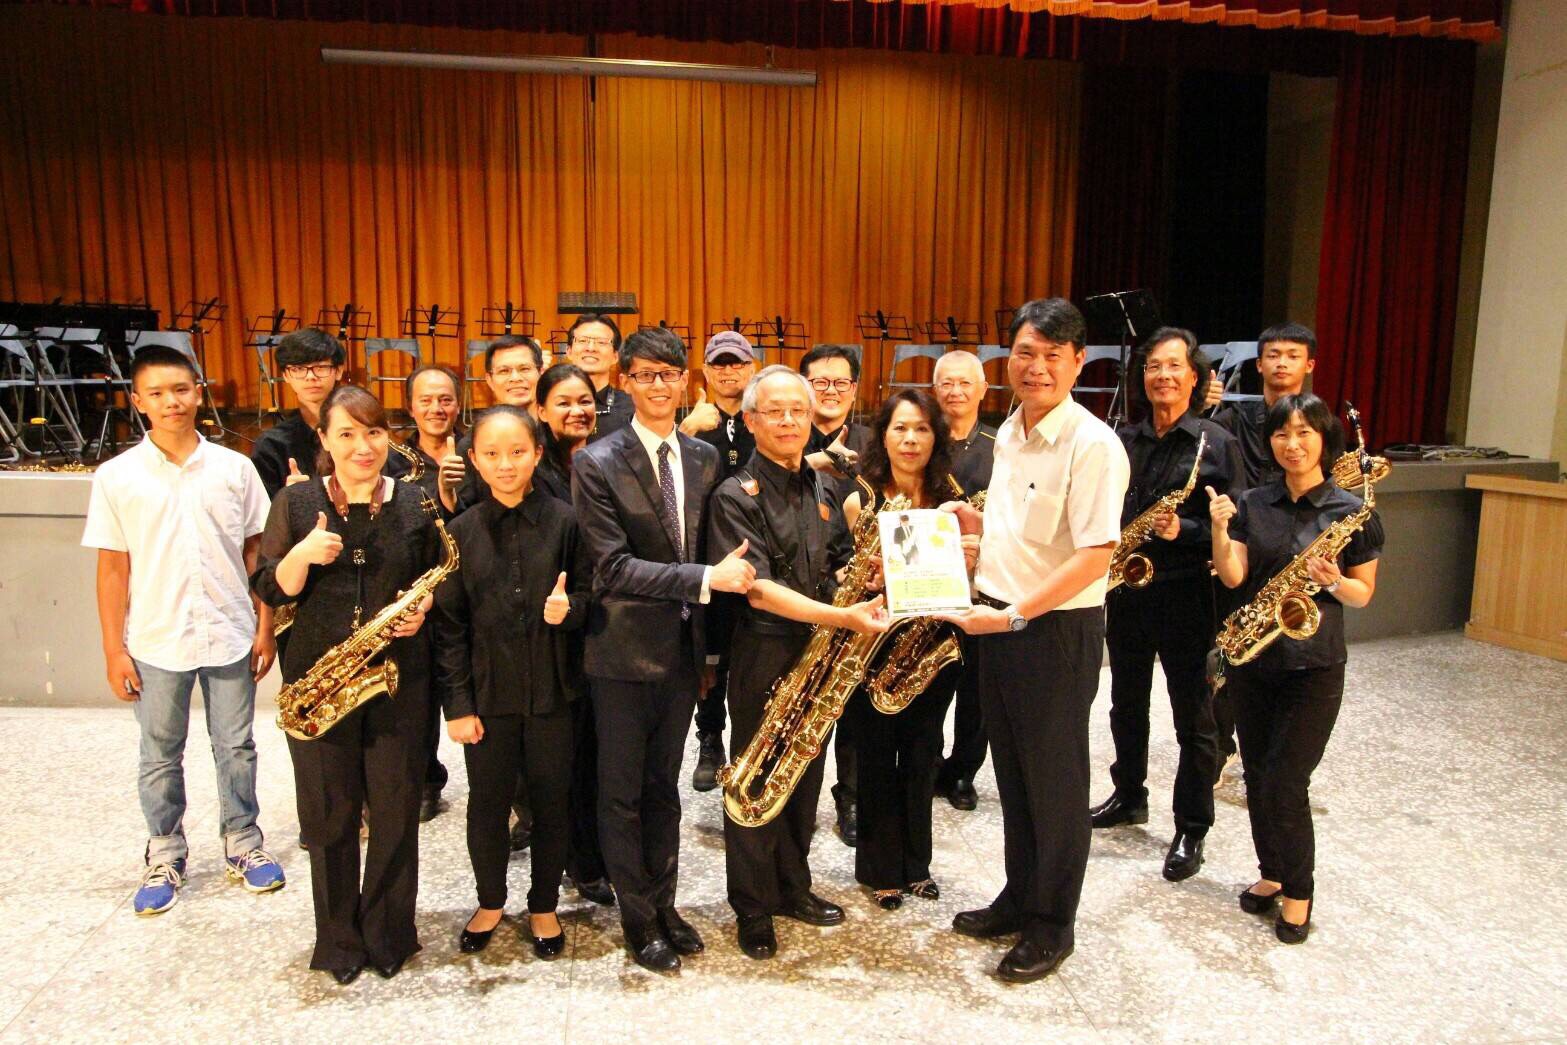 宜蘭社區大學 風動薩克斯風重奏(PhoneTong Saxophone Ensemble of Yilan Community University), 台灣